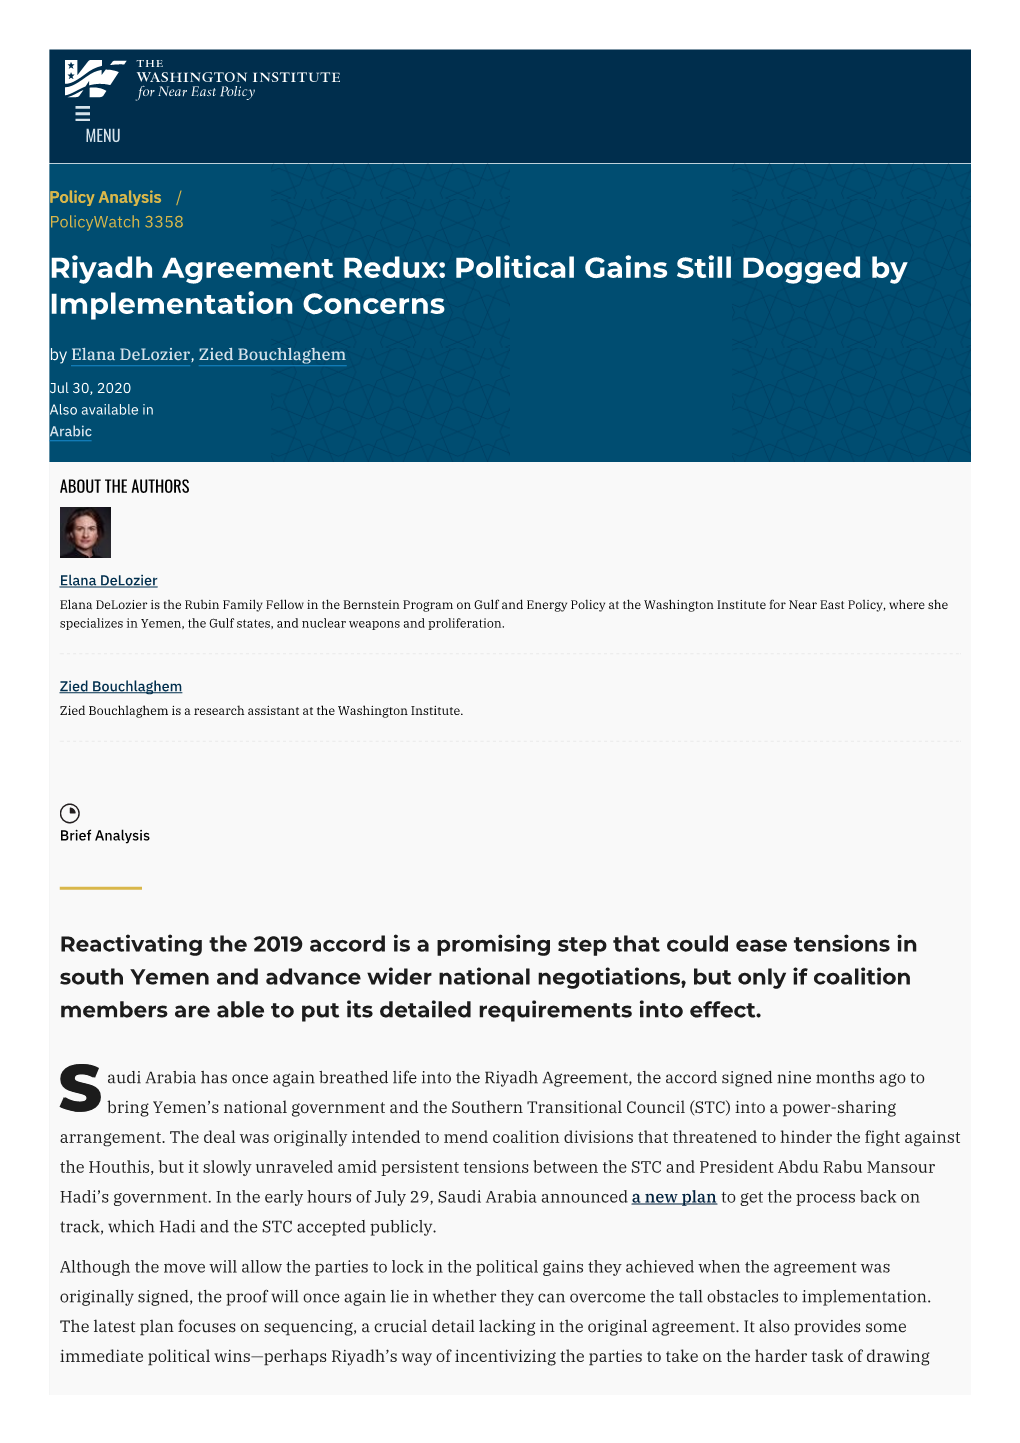 Riyadh Agreement Redux: Political Gains Still Dogged by Implementation Concerns | the Washington Institute